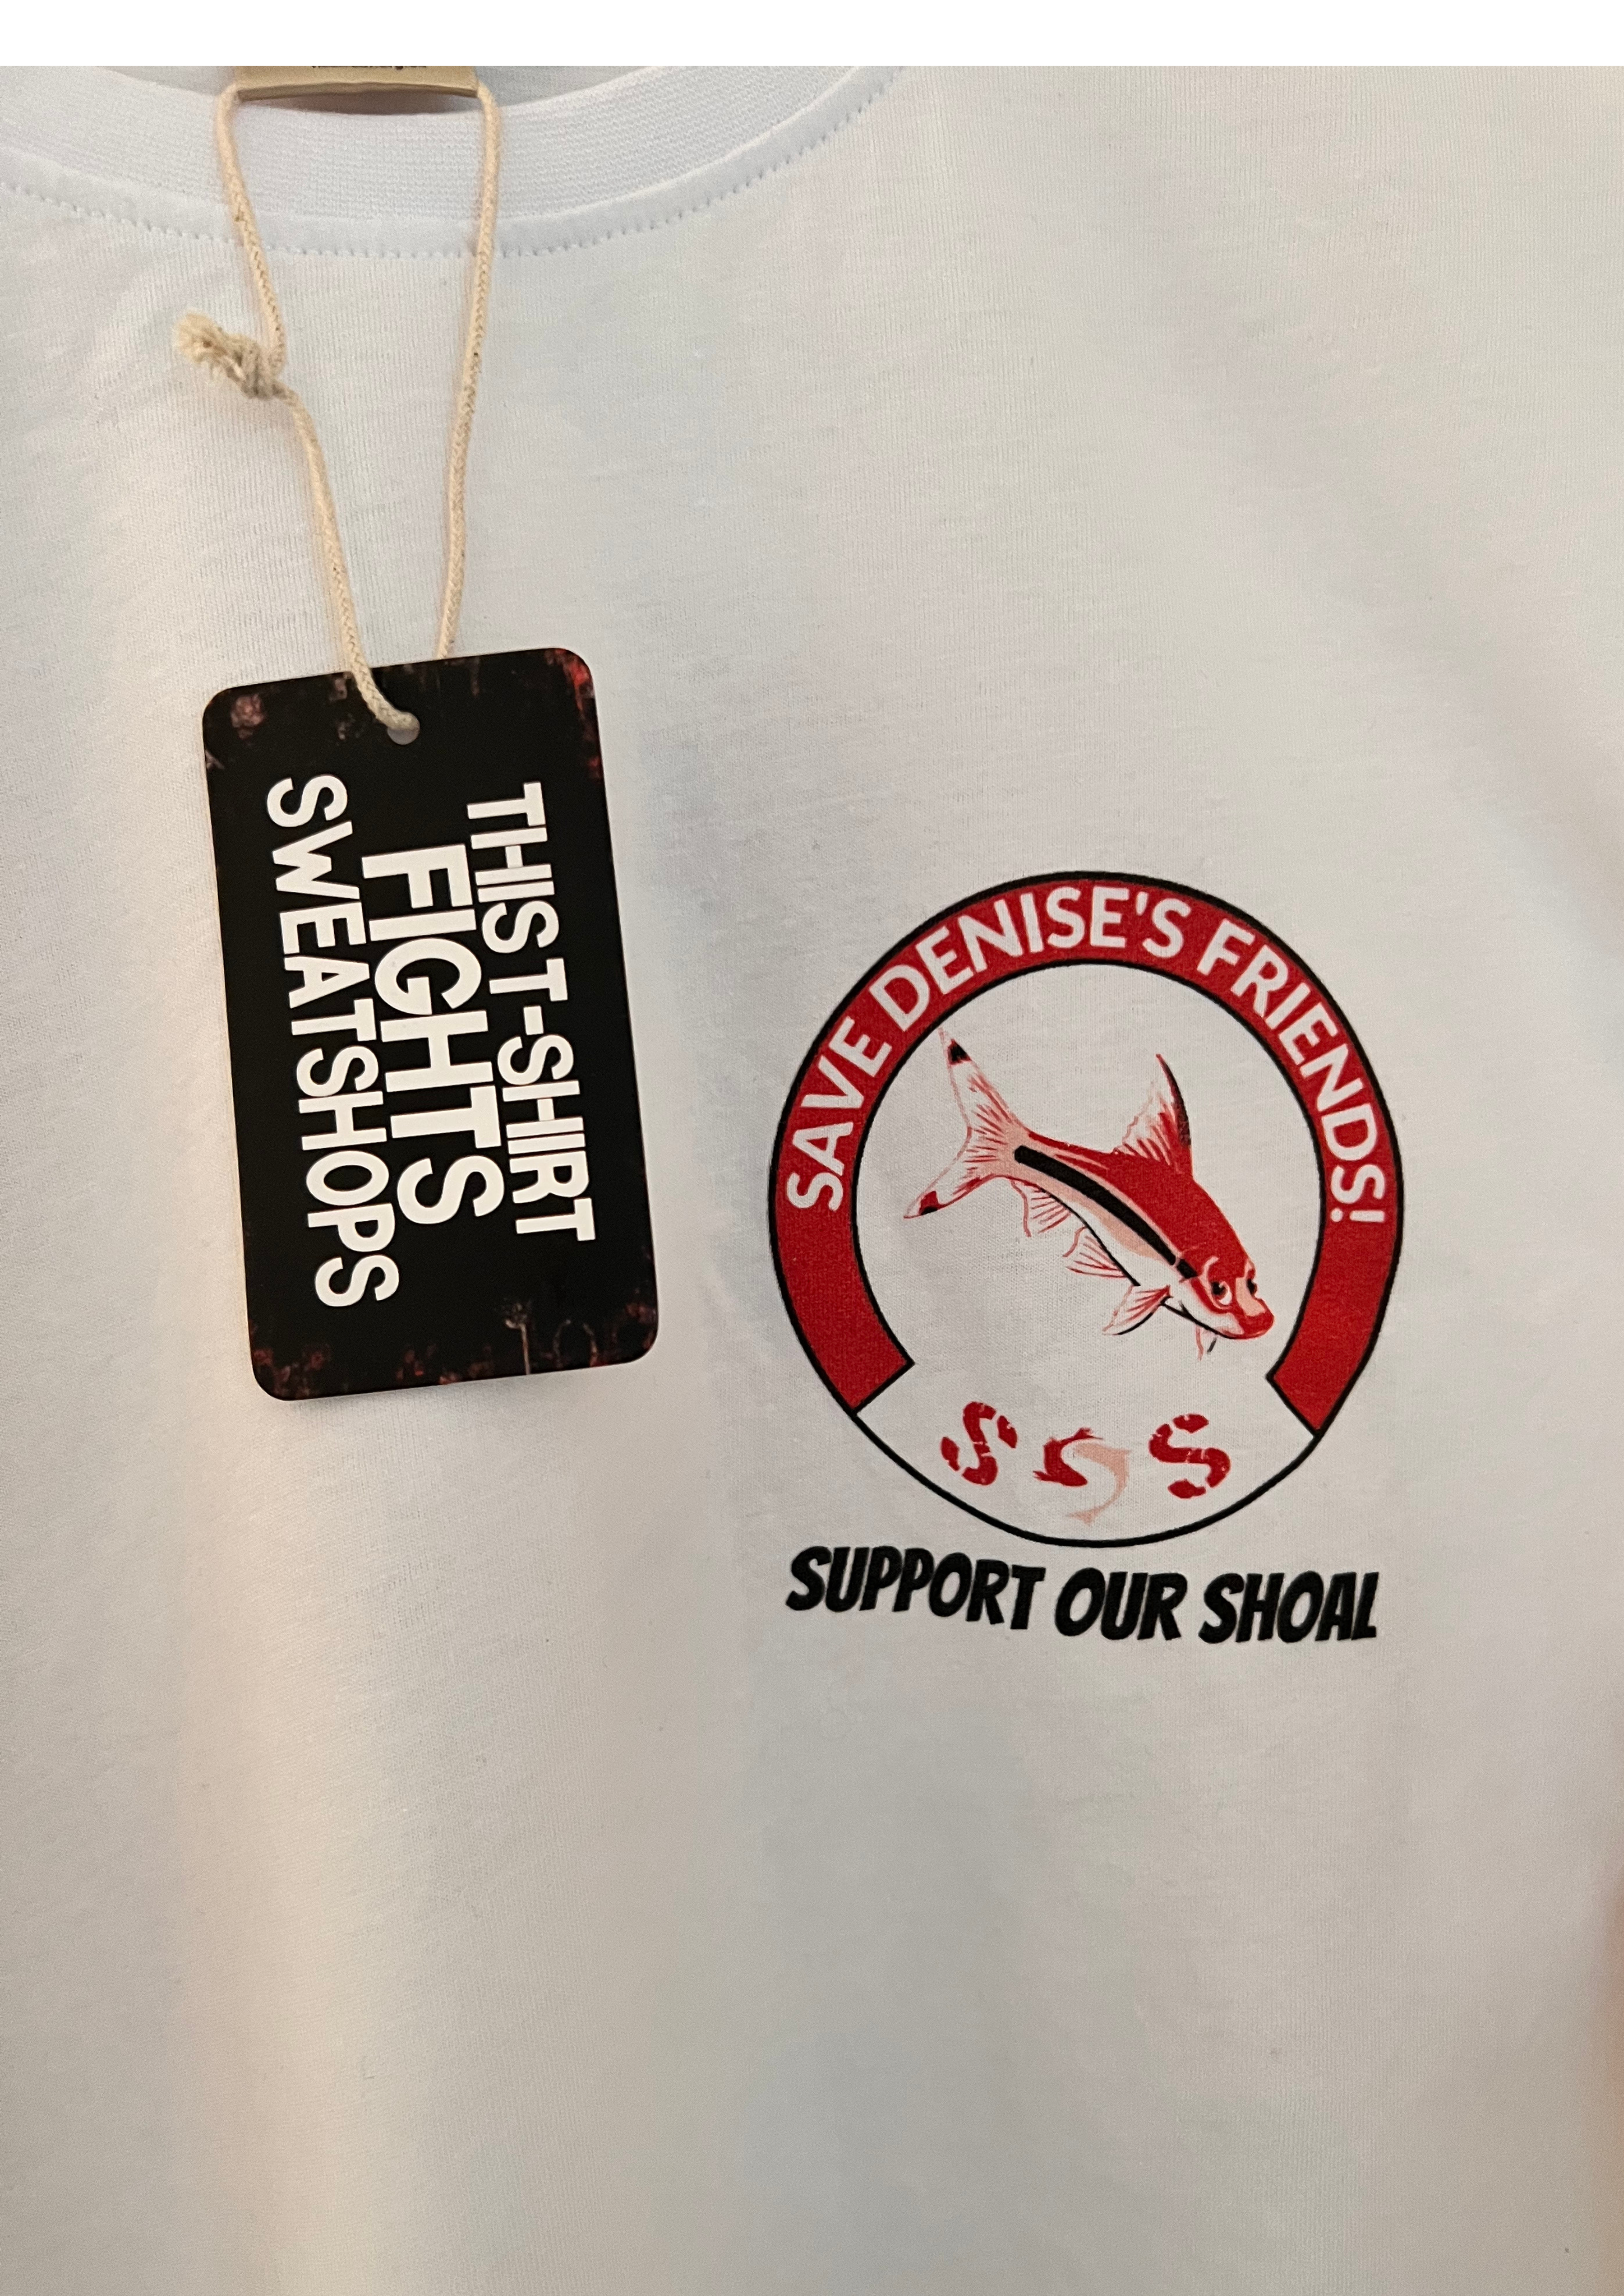 Save Denise's Friends logo - front